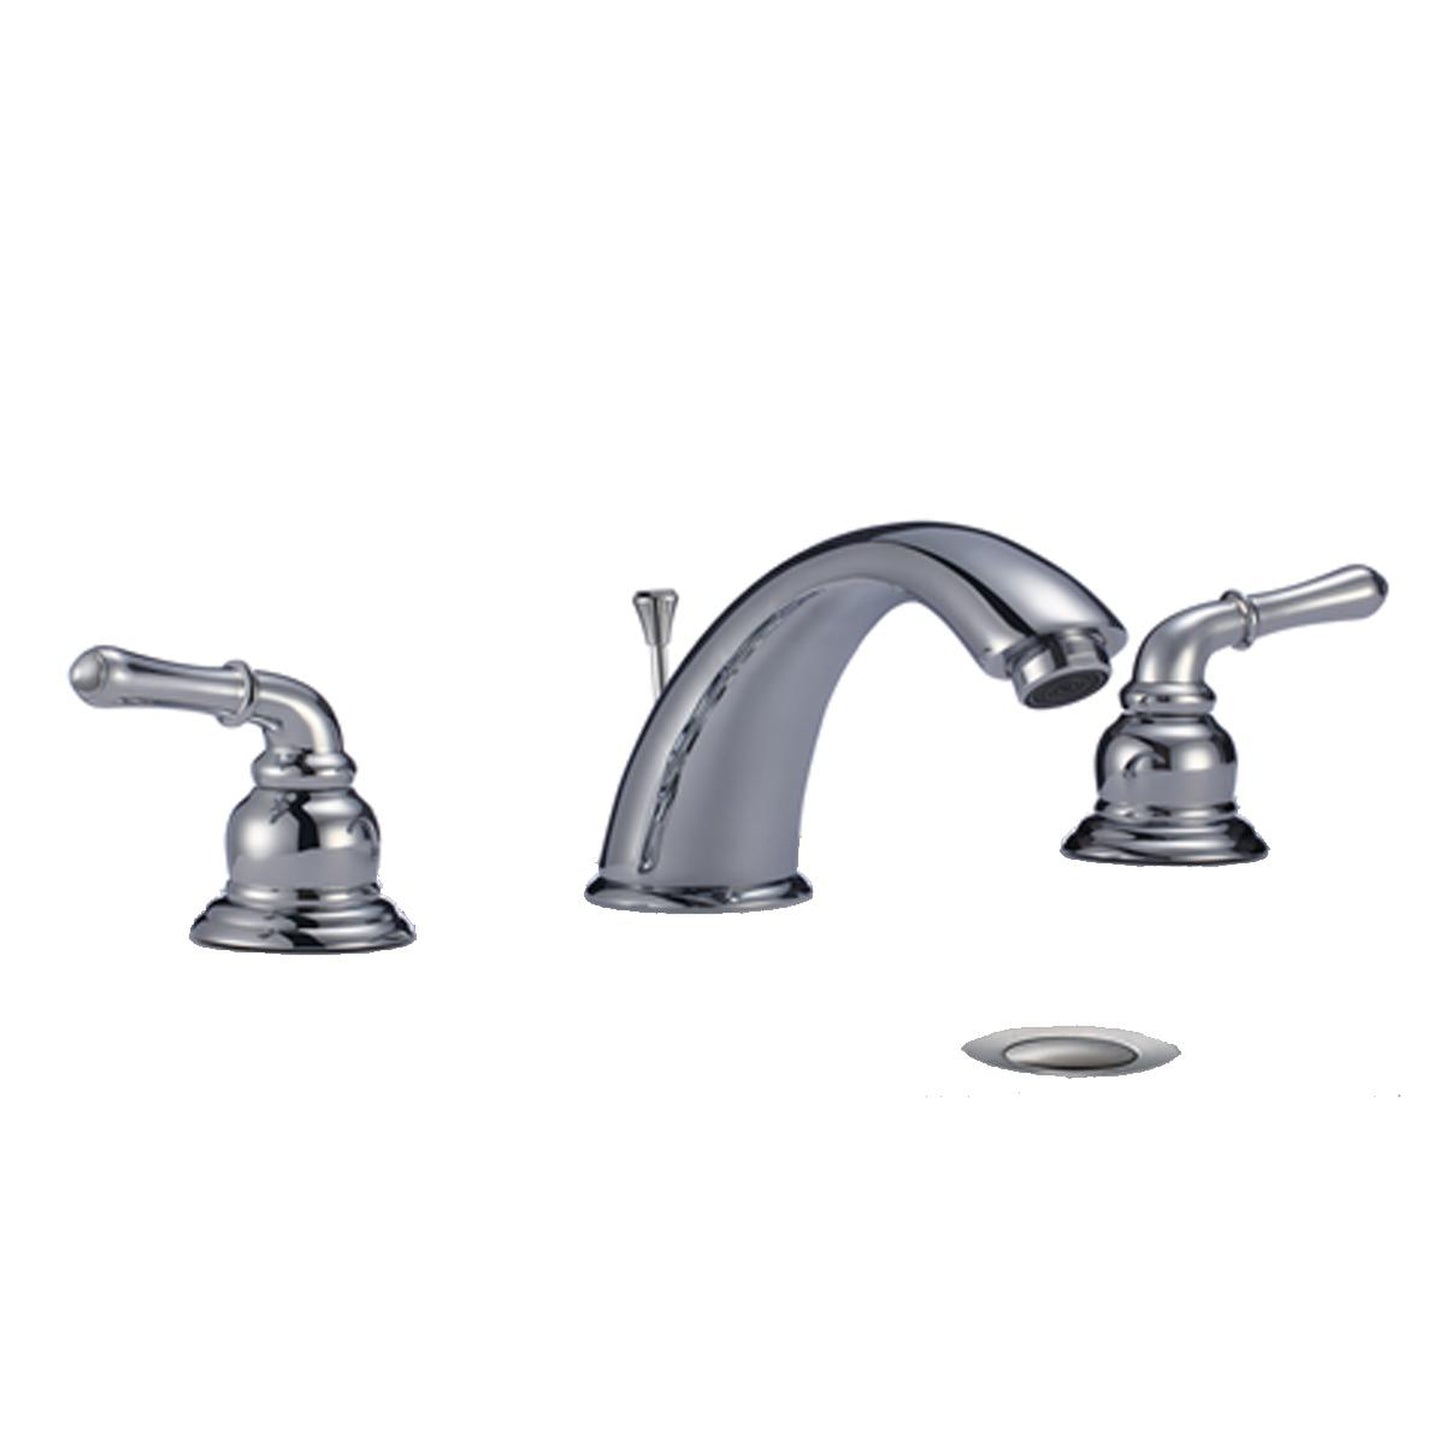 Pelican Int'l Cascade Series PL-8303 Three Hole Bathroom Faucet In Chrome Finish